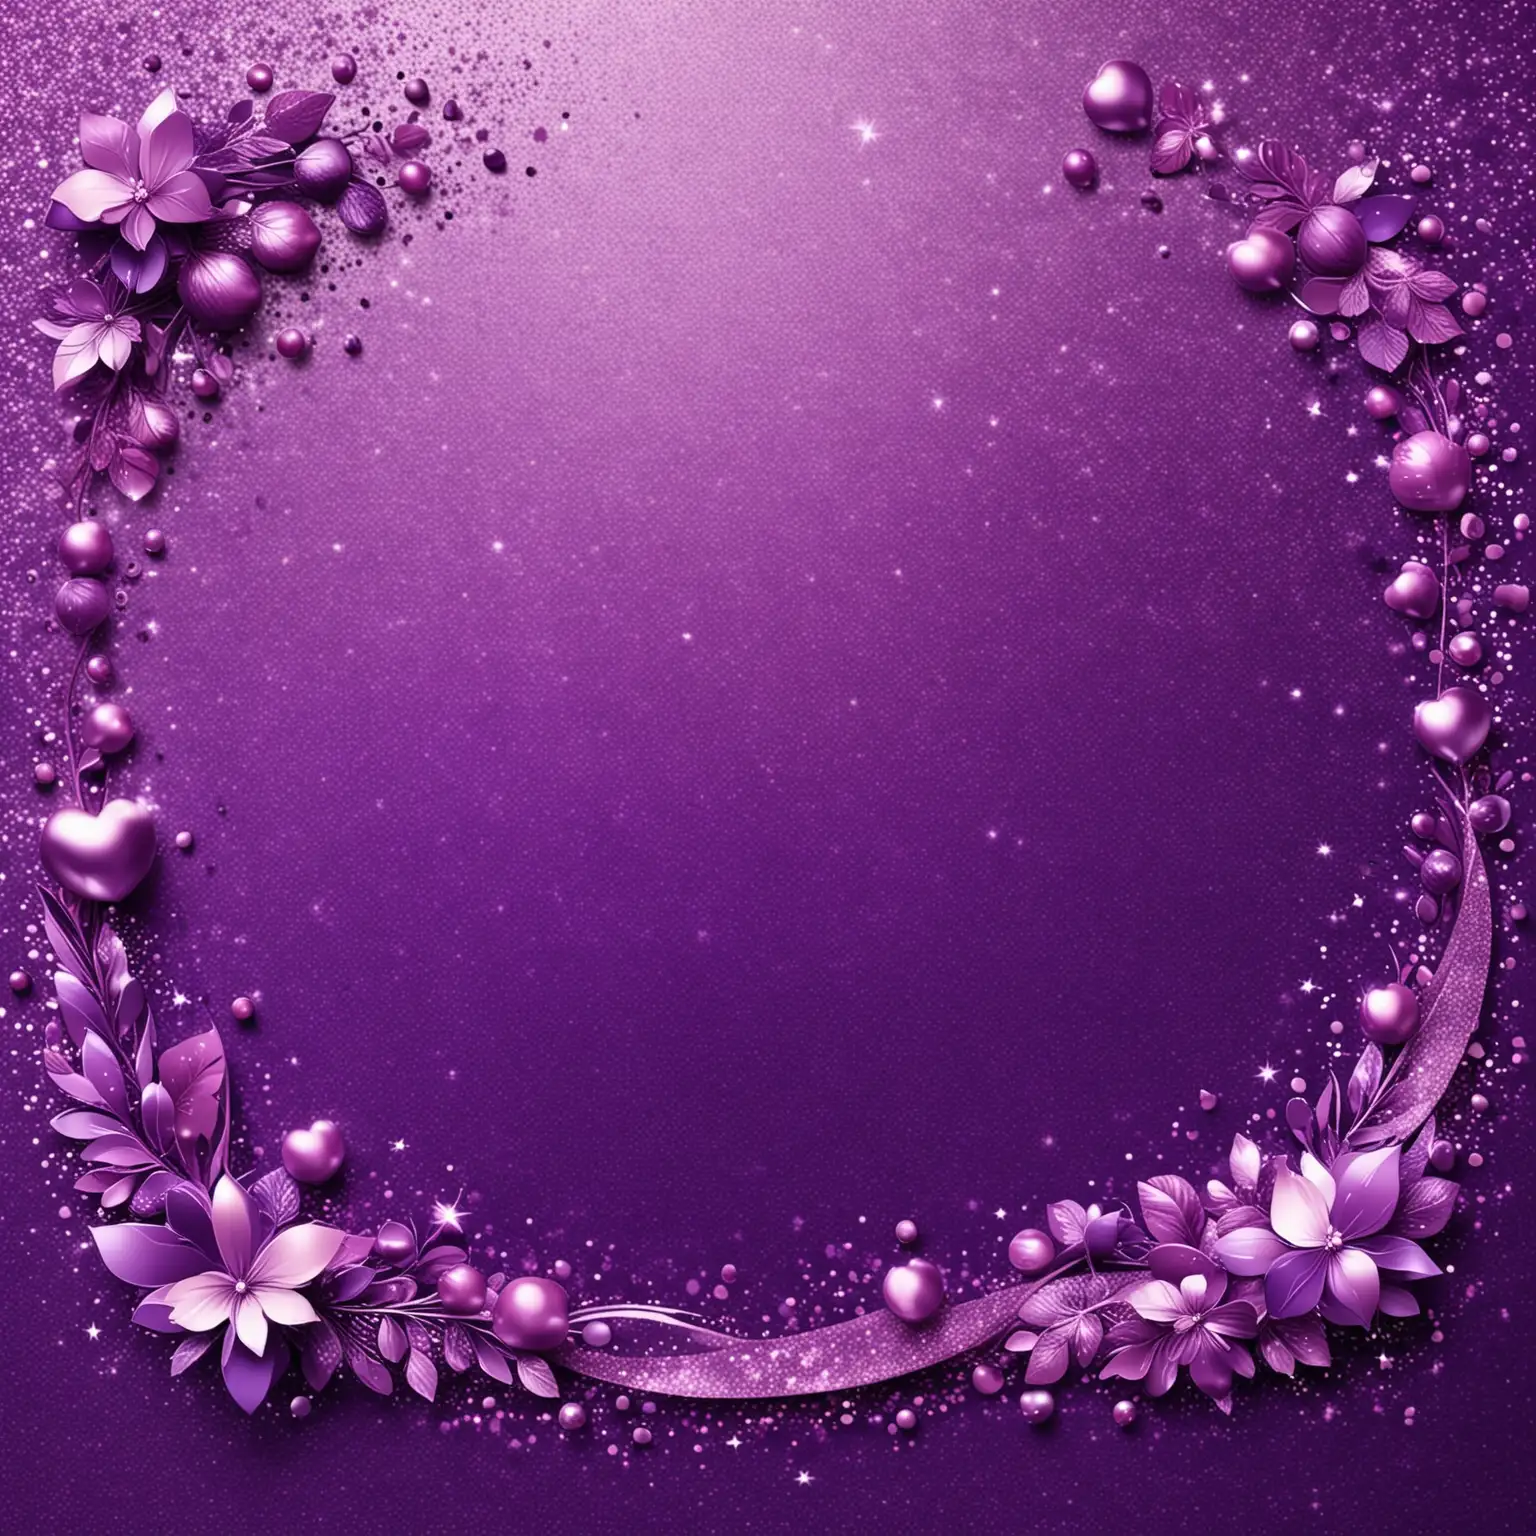 Elegant Purple Glitter Background with Elements